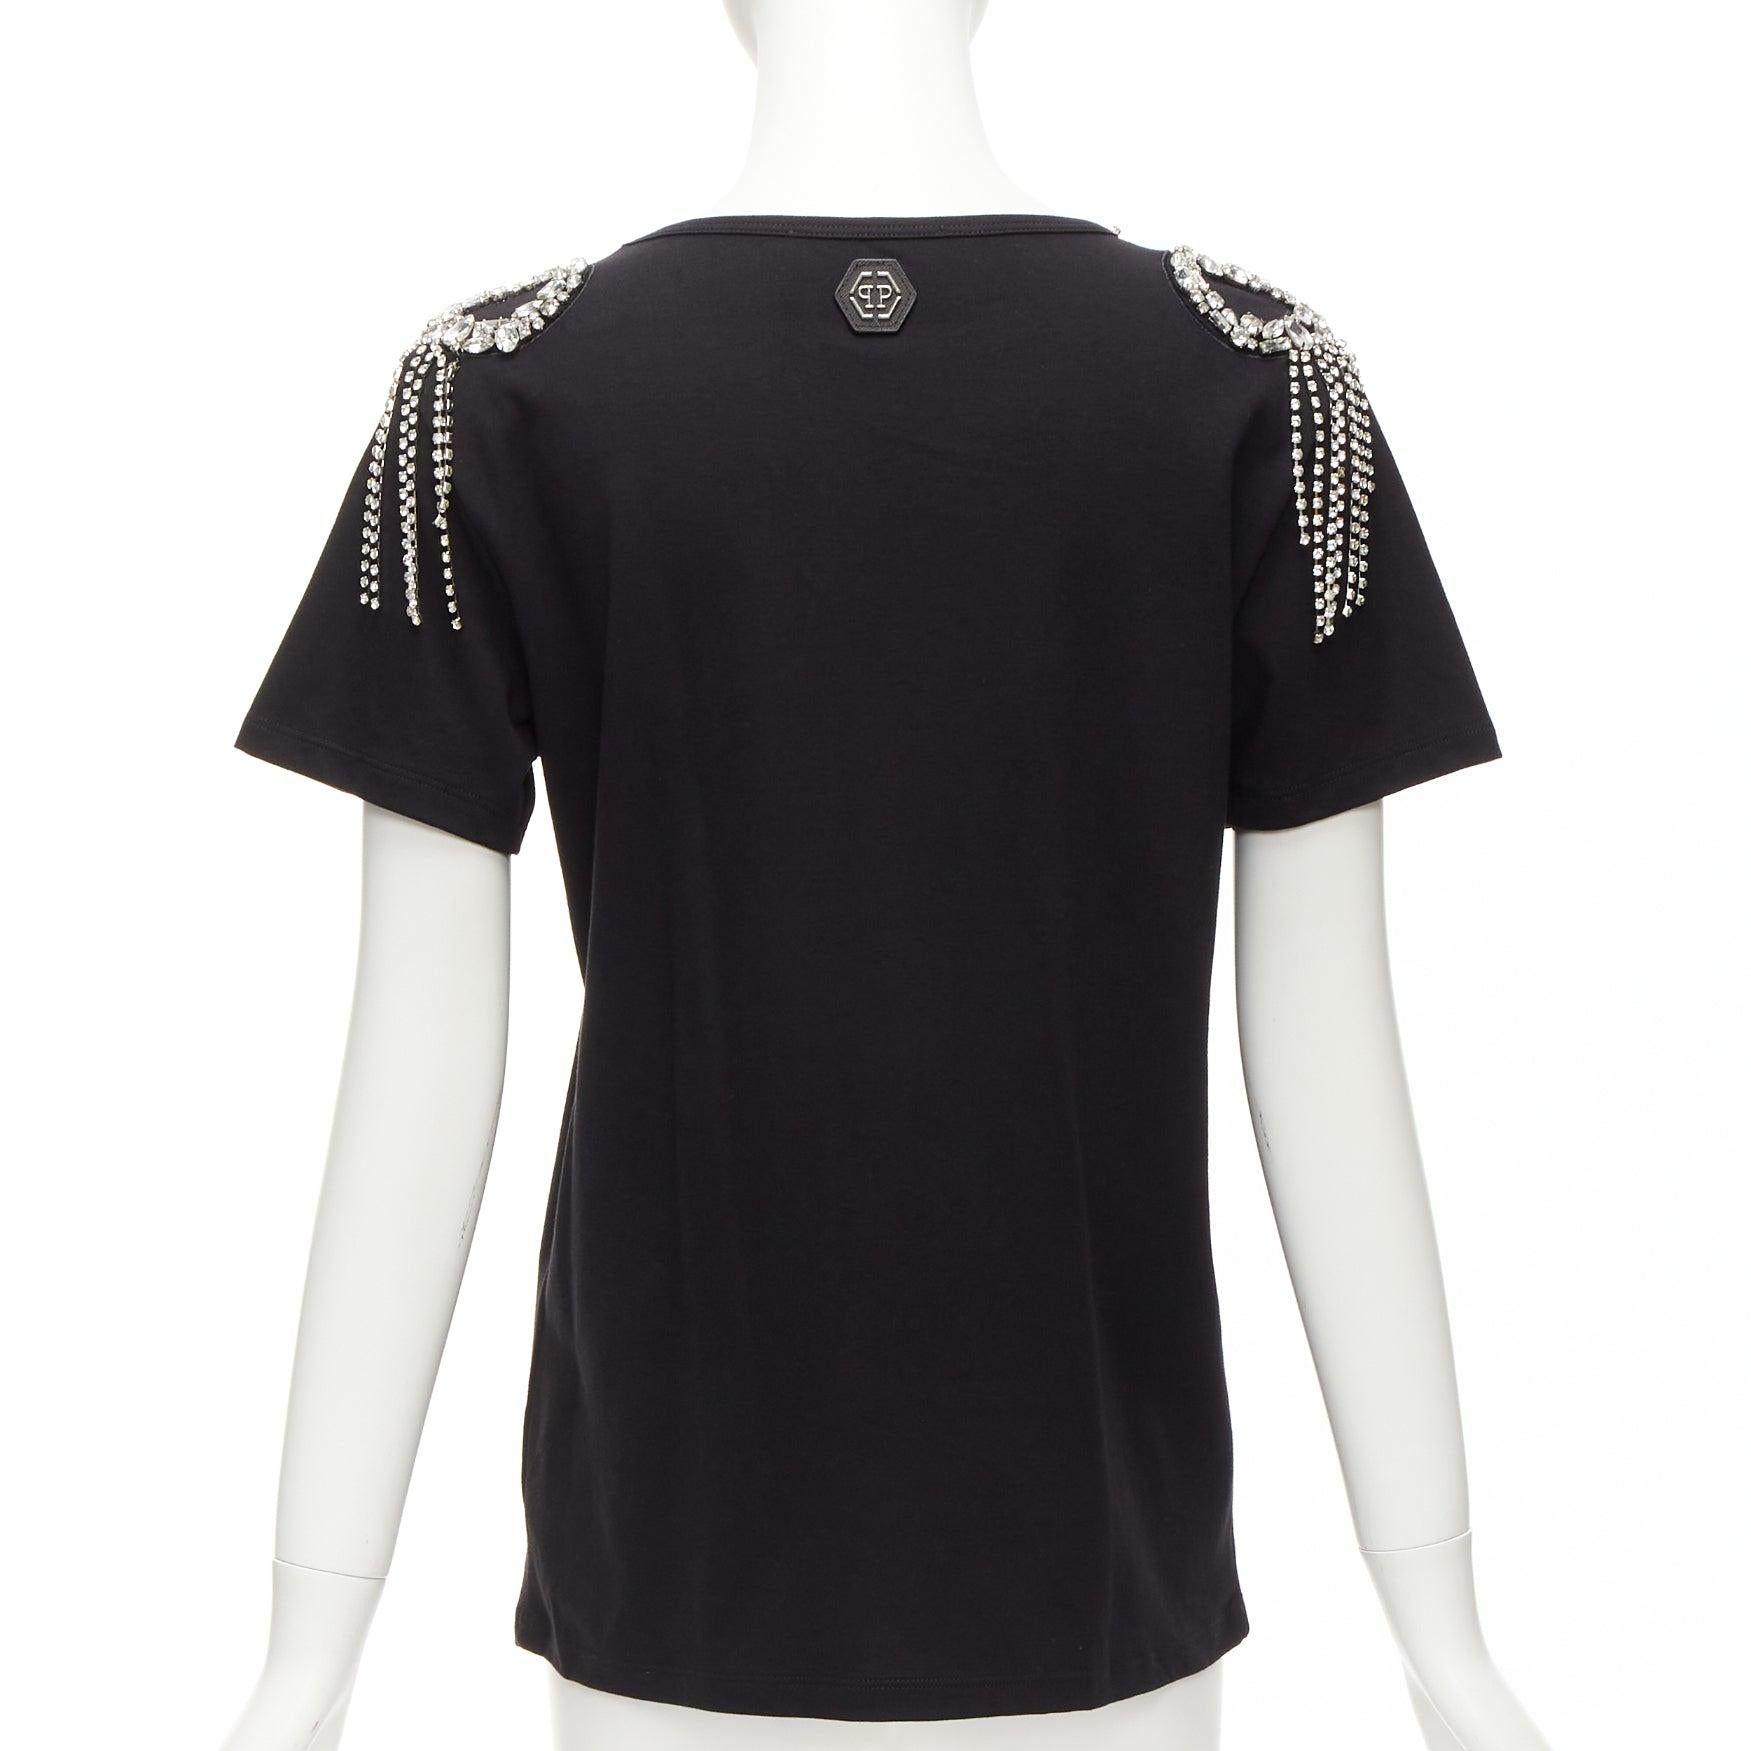 PHILLIP PLEIN FEMME black embroidery clear crystal fringe embellished tshirt XS For Sale 1